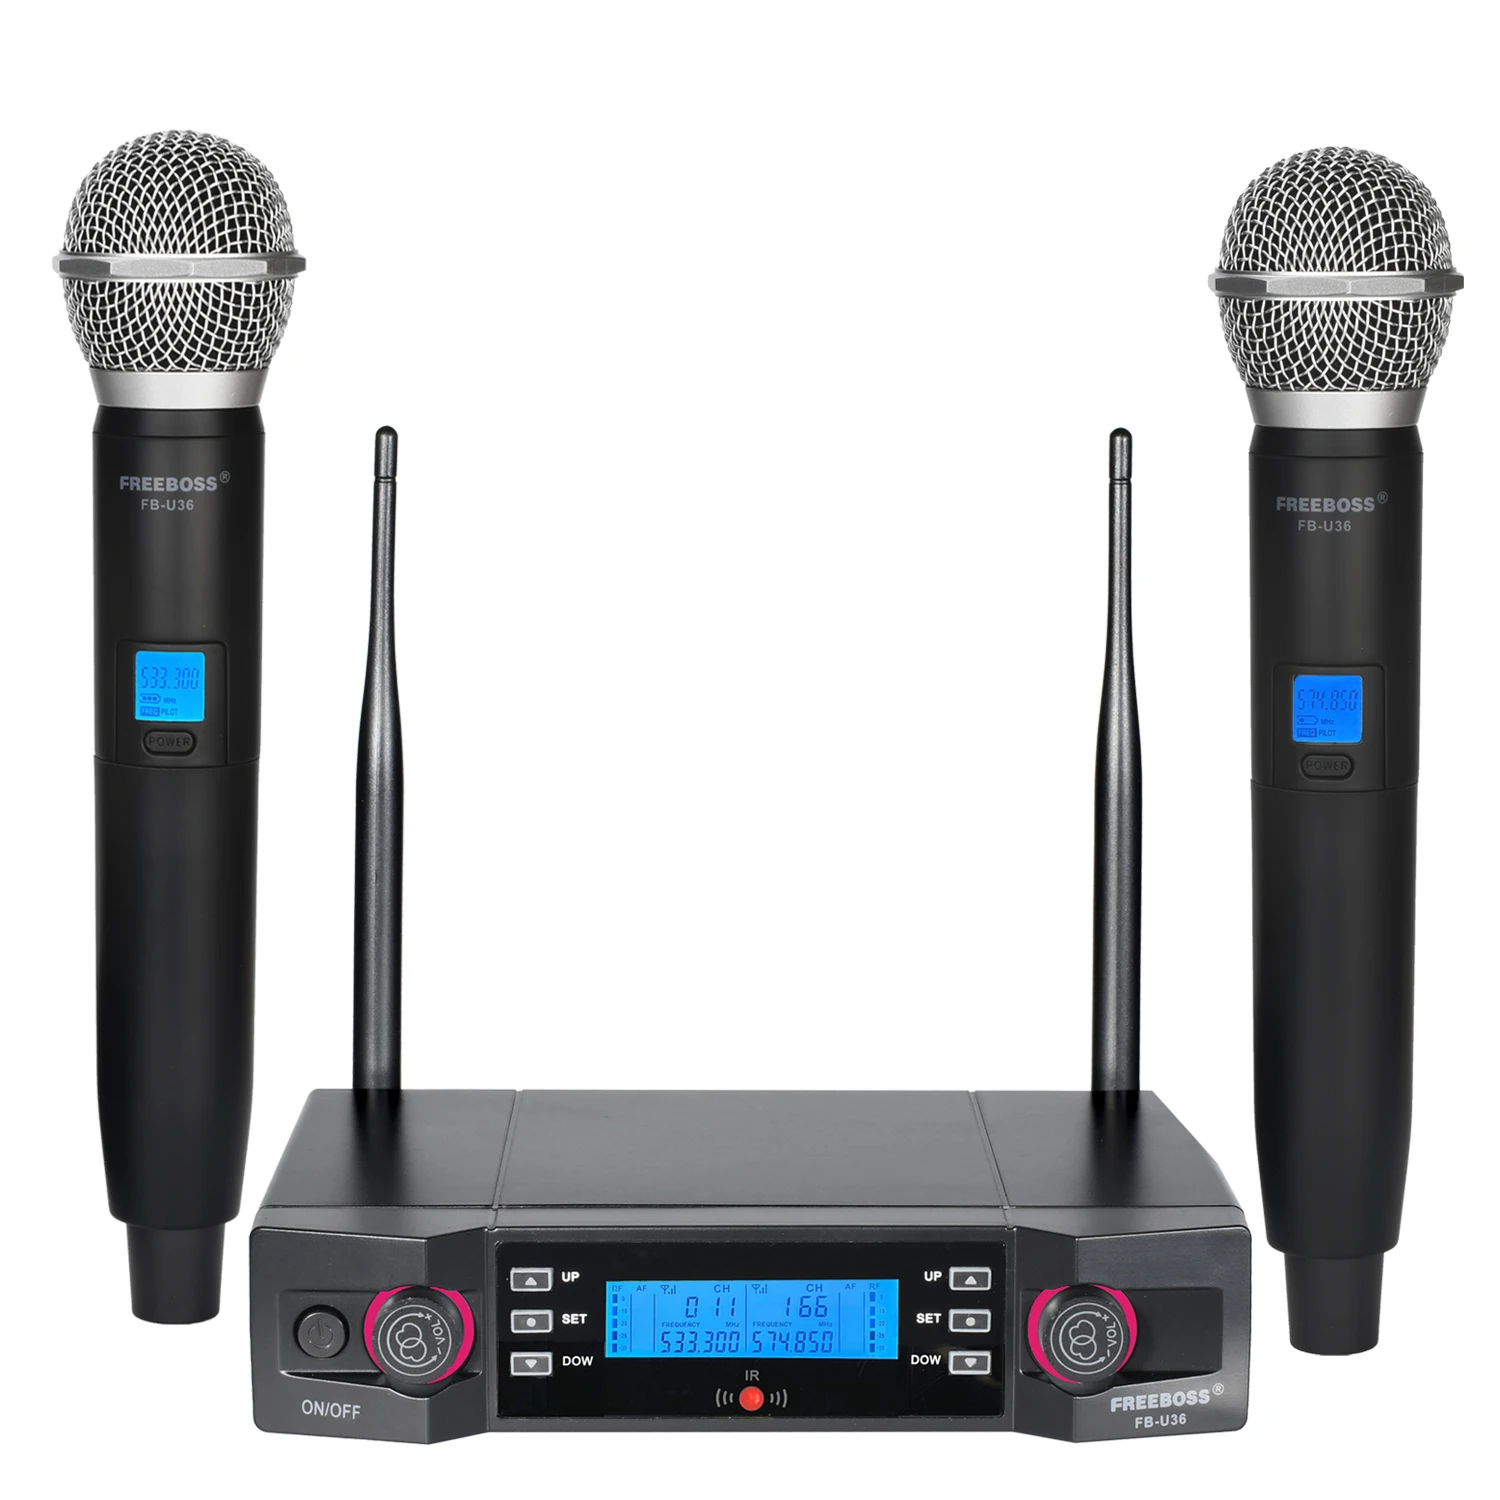 FREEBOSS FB-U36 Handheld Wireless Microphone 2 Way Adjustable Frequency Party Karaoke Microphone